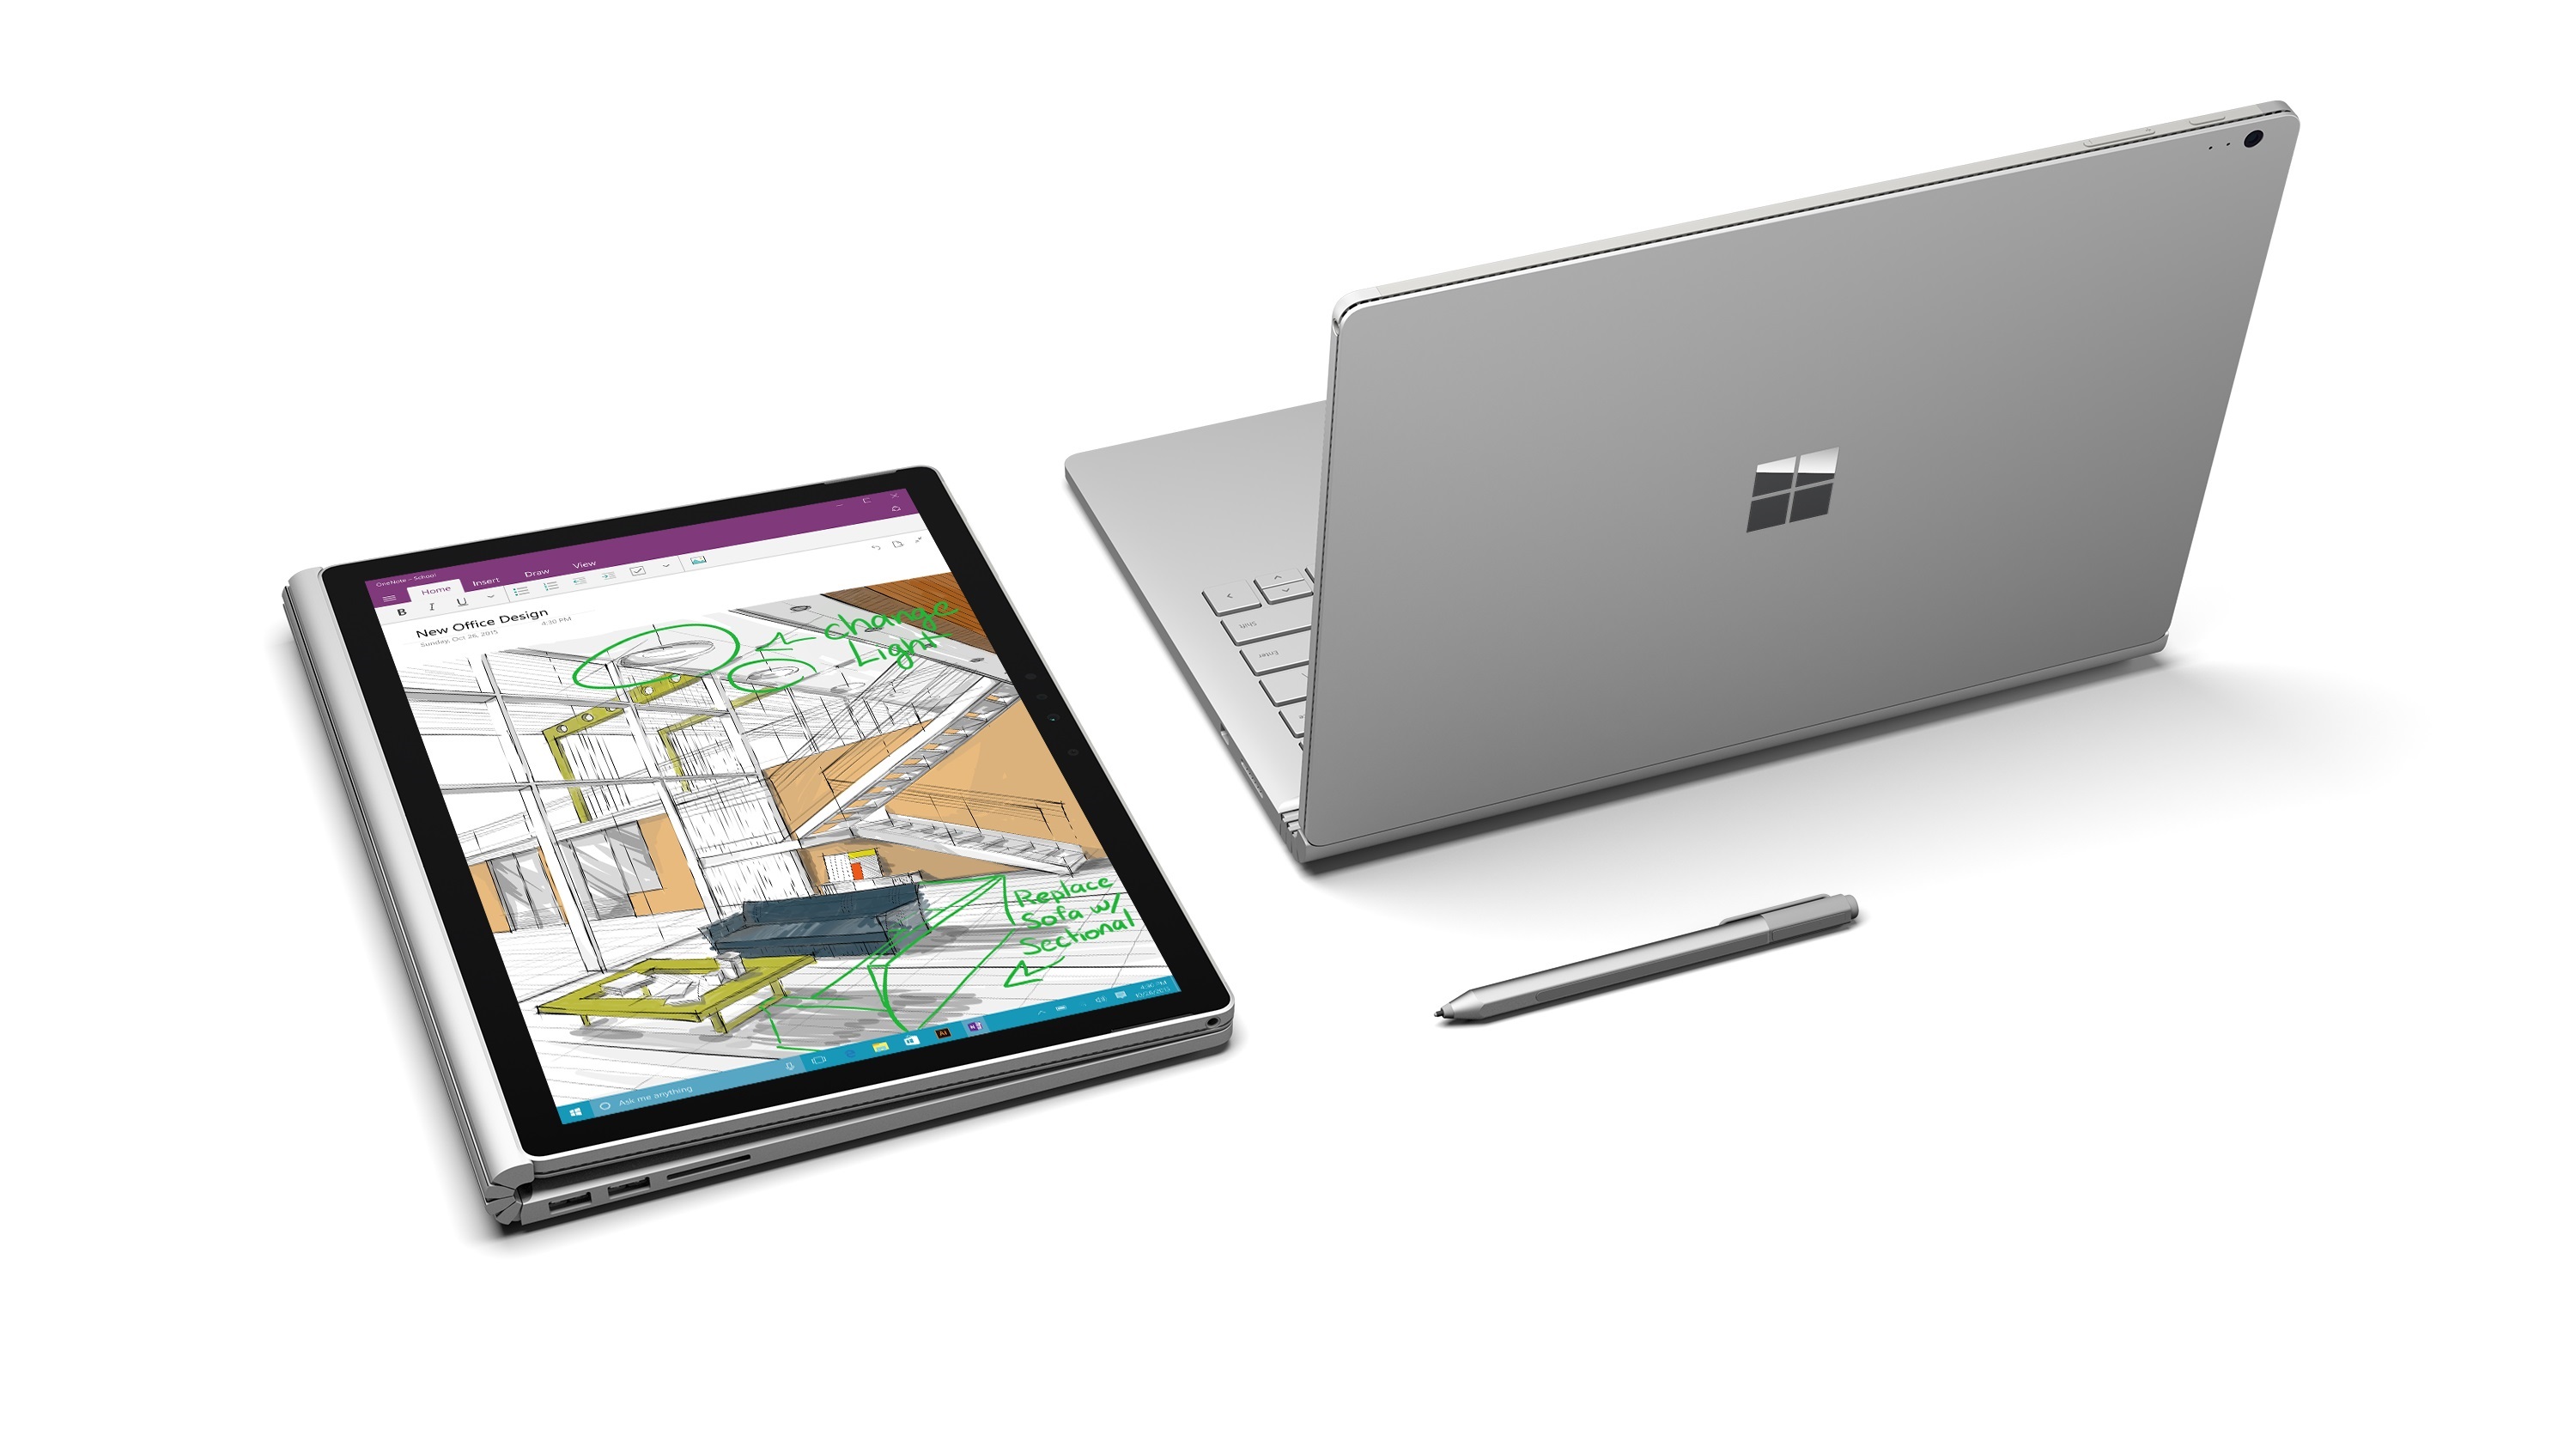 Surface Book 3 (13,5 Inches) 512GB/ Intel Core i7-1065G7/ 32GB RAM/ NVIDIA GeForce GTX 1650 Max-Q 4GB GDDR5